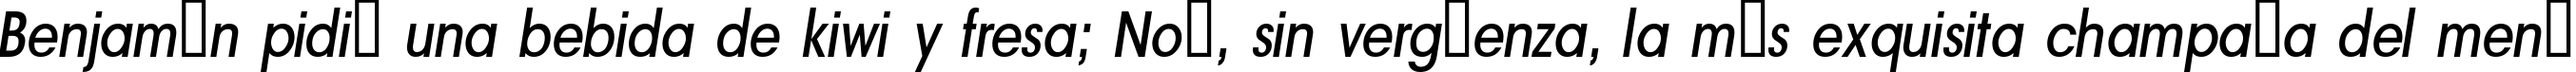 Пример написания шрифтом a_AvanteNrMedium Italic текста на испанском